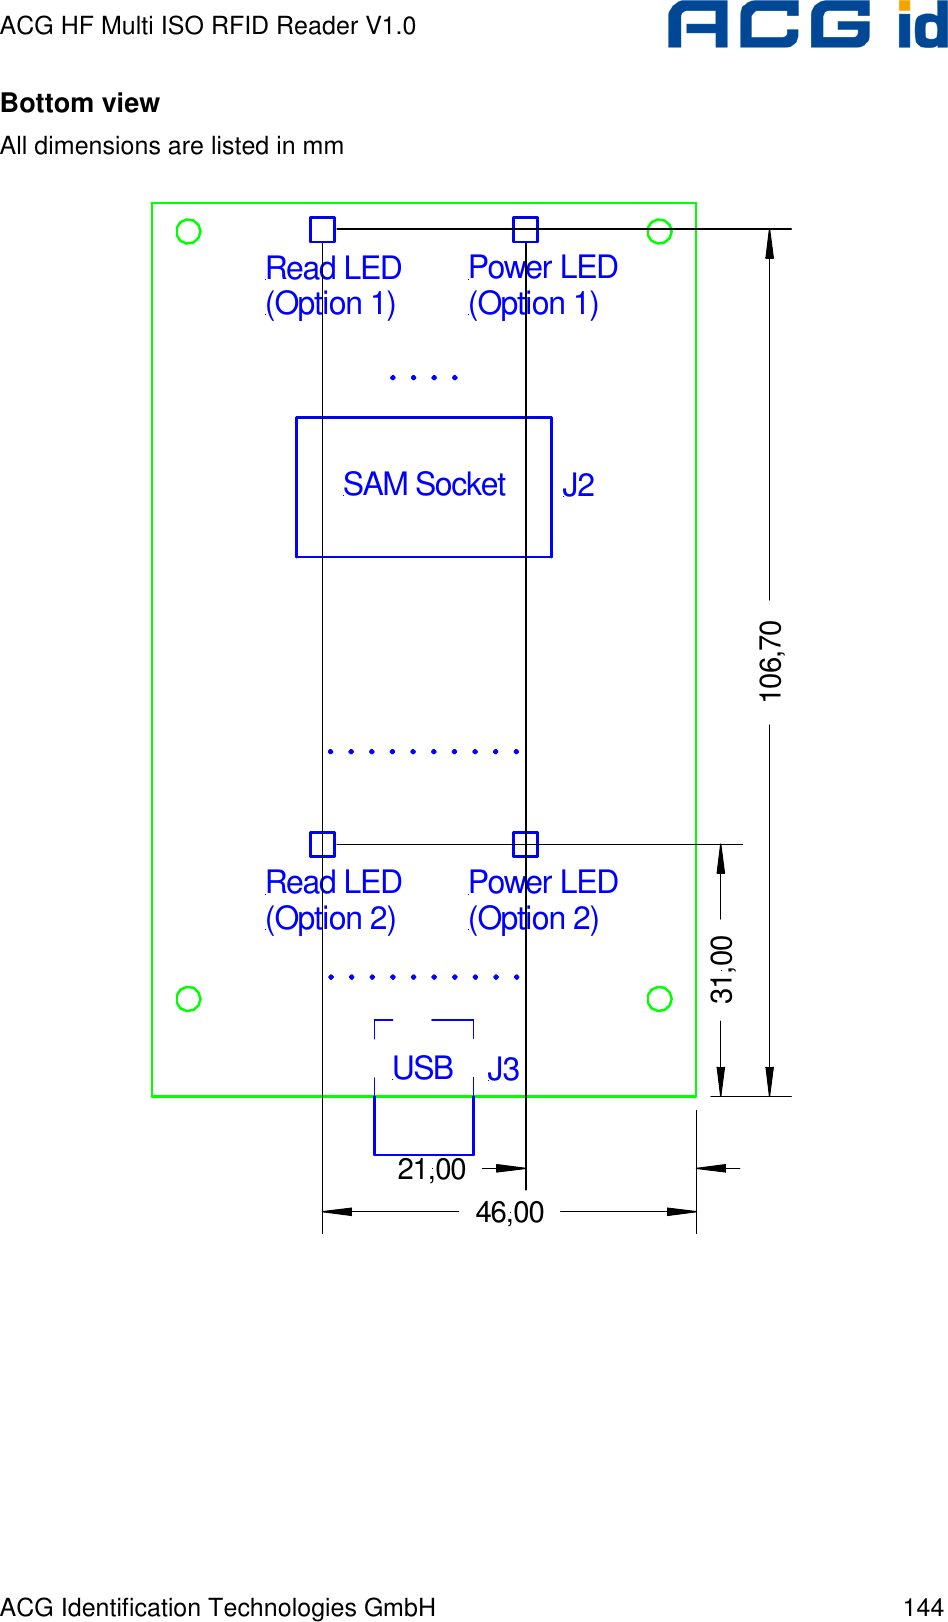 ACG HF Multi ISO RFID Reader V1.0 ACG Identification Technologies GmbH  144 Bottom view All dimensions are listed in mm J2J3SAM SocketUSBRead LED(Option 1) Power LED(Option 1)Power LED(Option 2)Read LED(Option 2)31,00106,7021,0046,00   